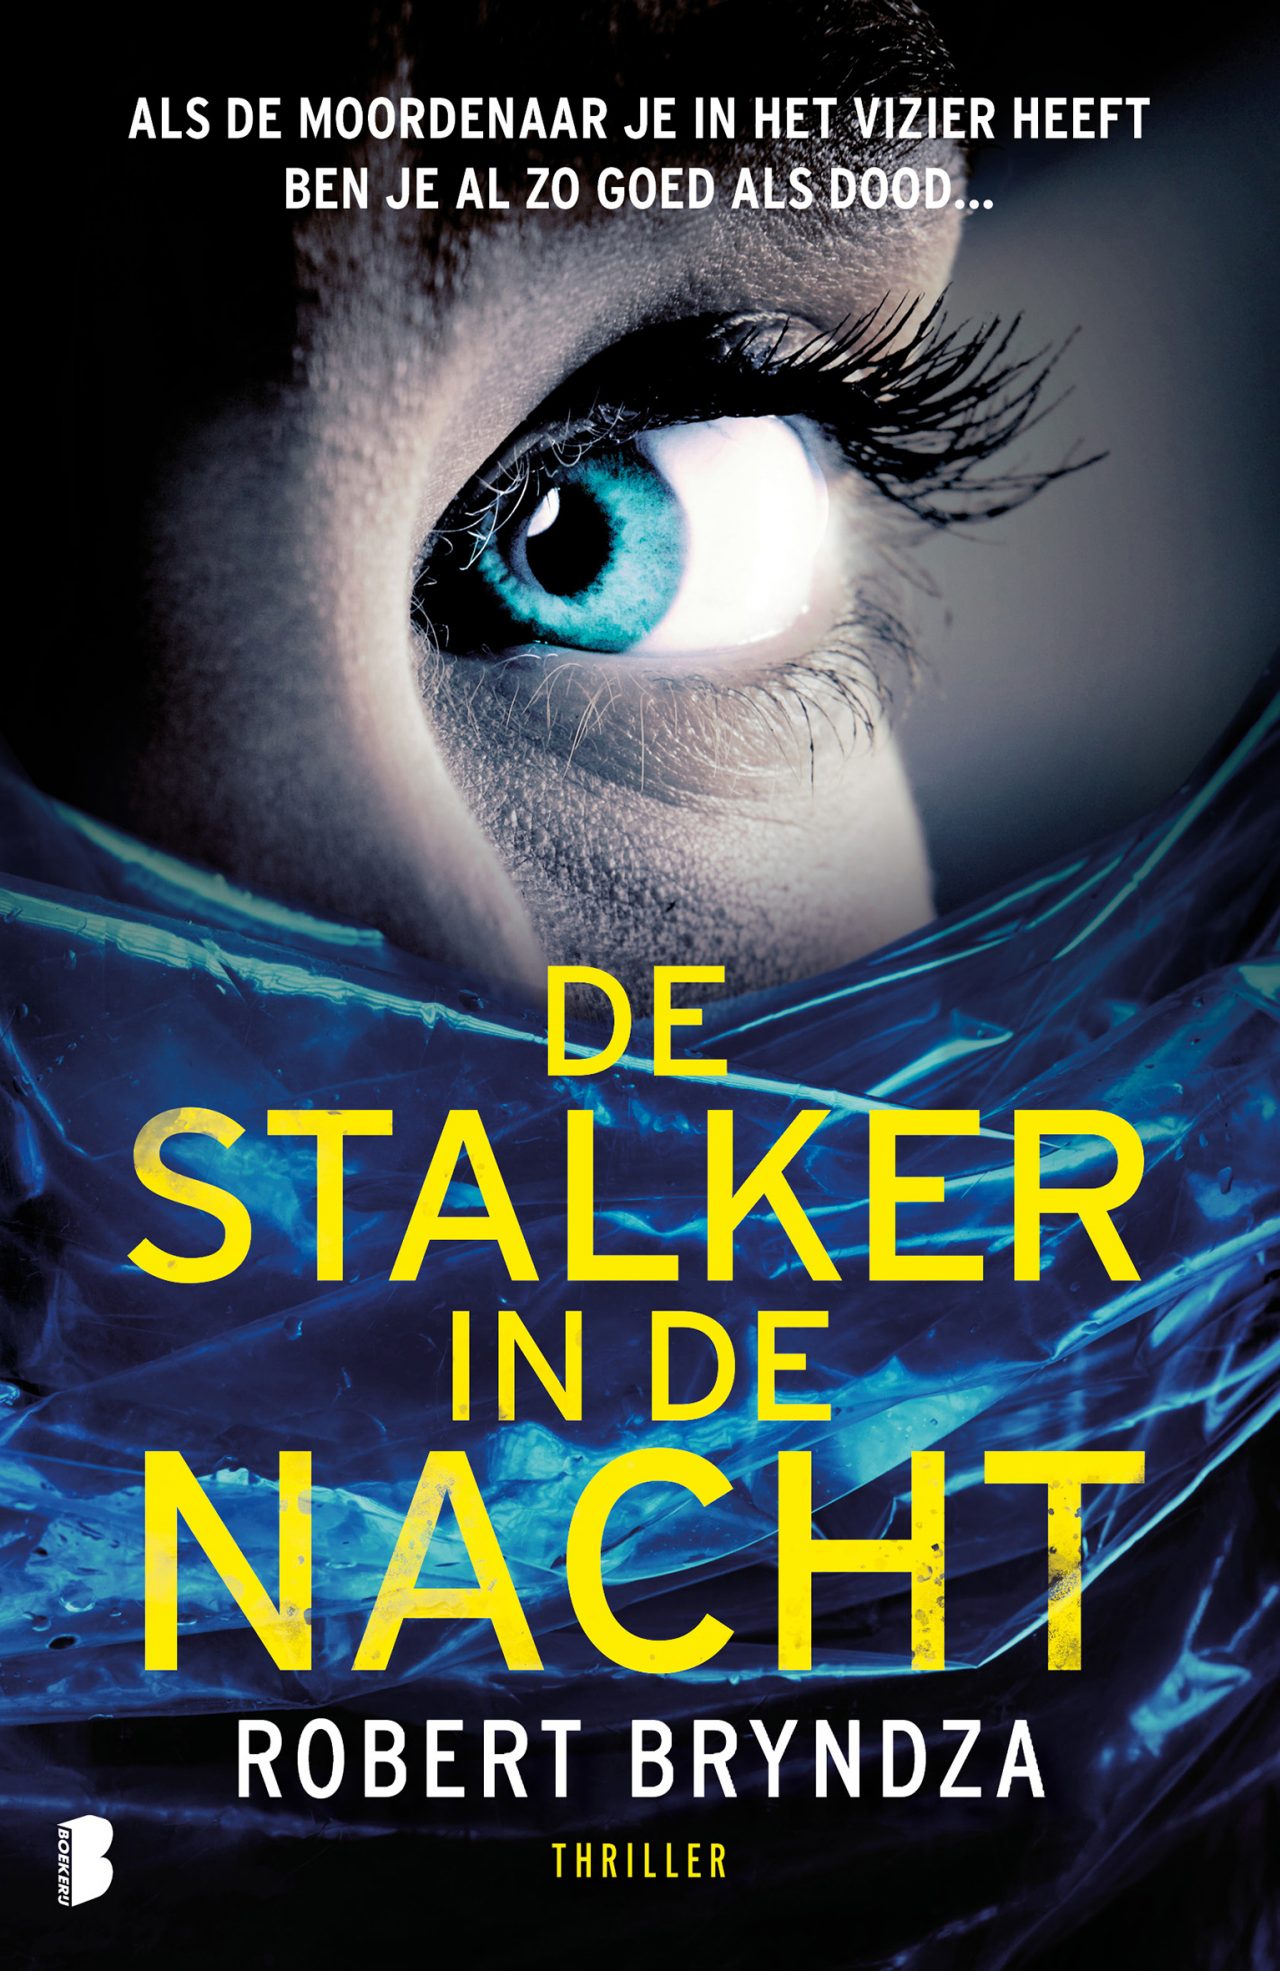 the night stalker by robert bryndza